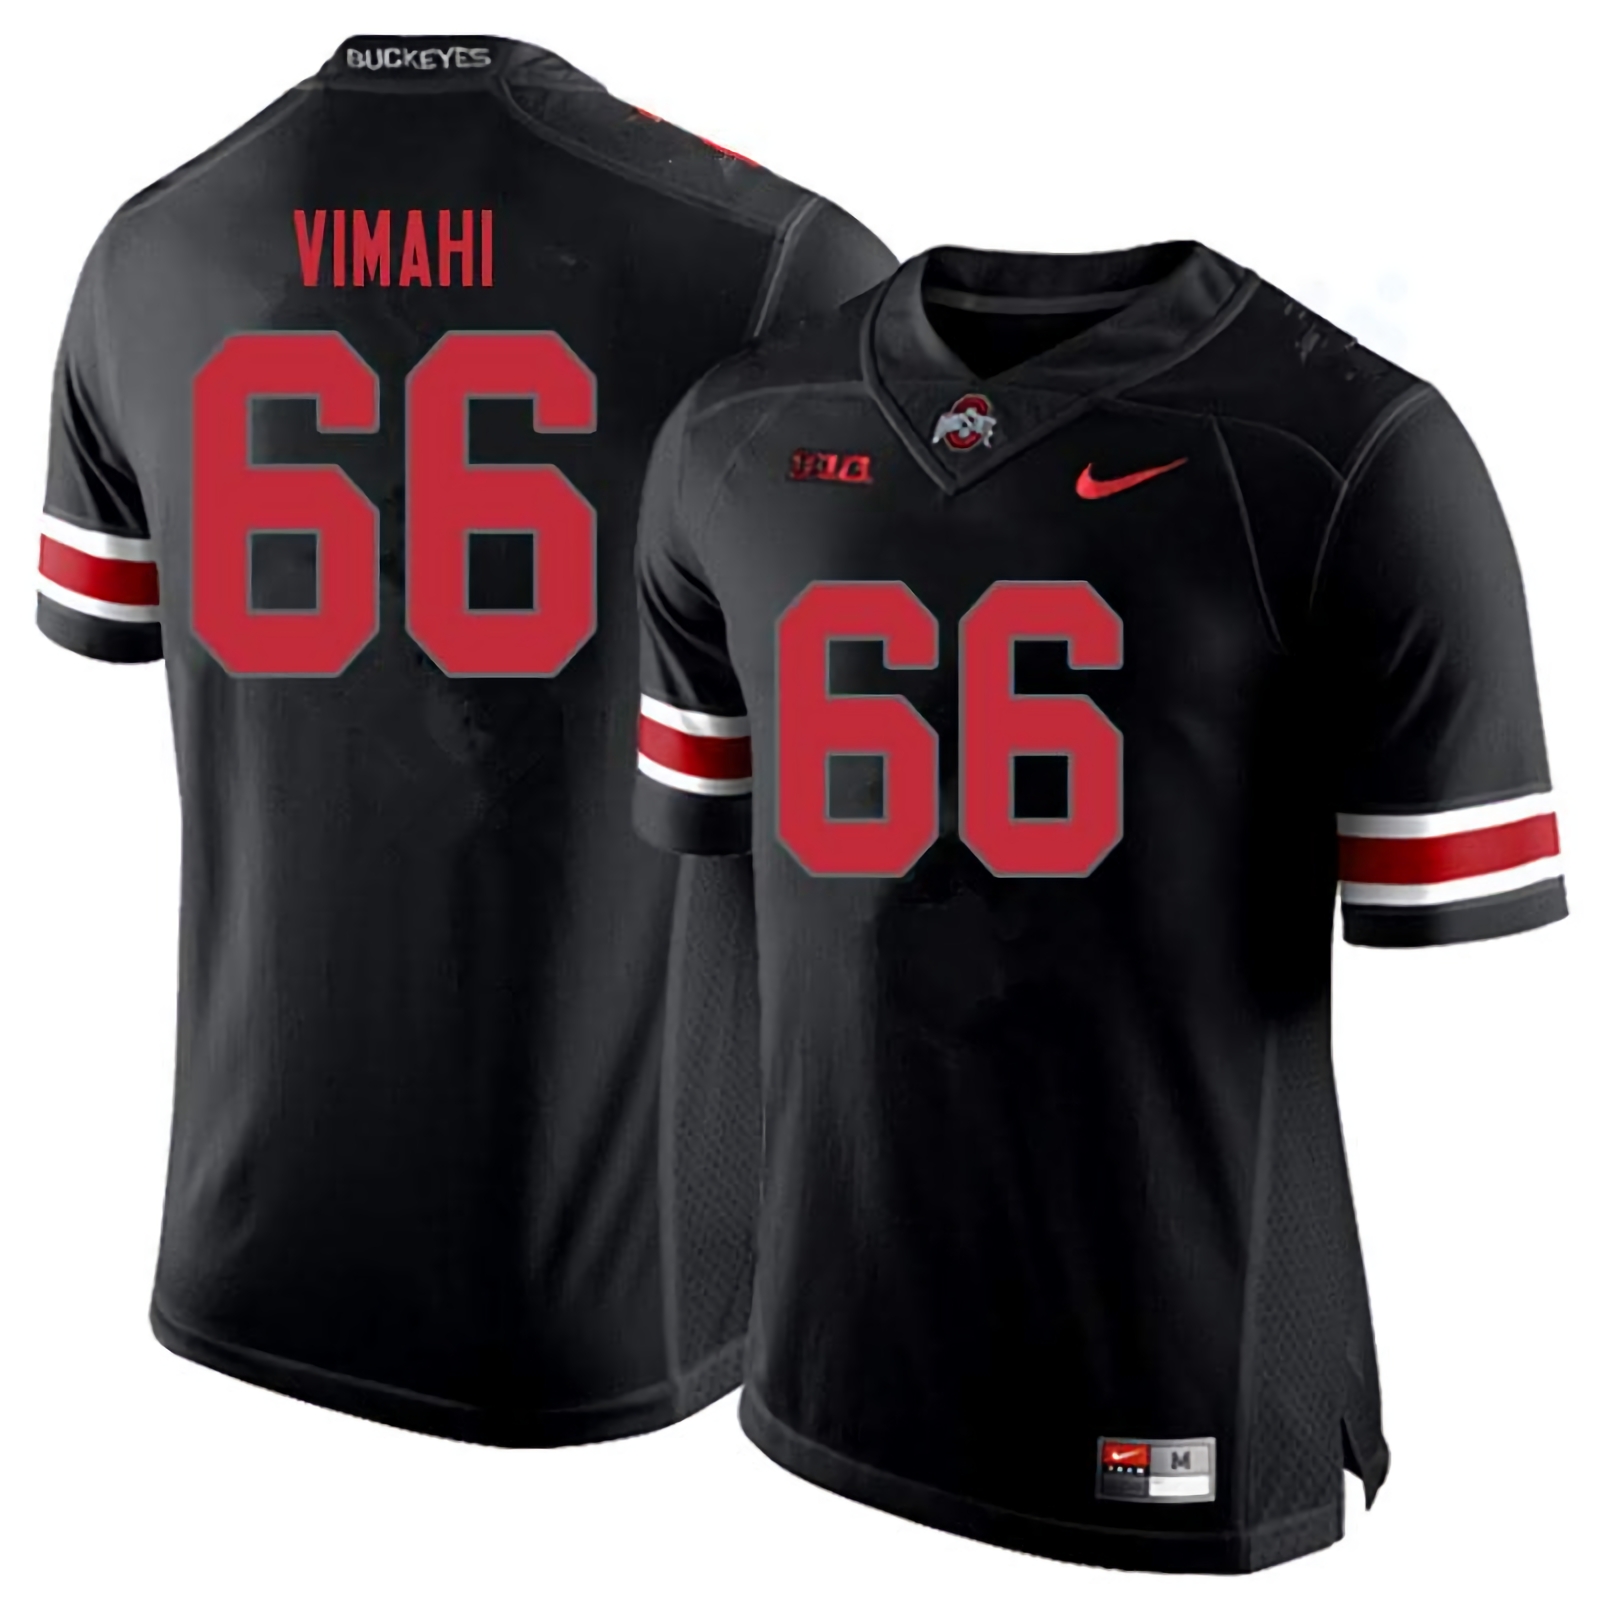 Enokk Vimahi Ohio State Buckeyes Men's NCAA #66 Nike Blackout College Stitched Football Jersey MHR6356CS